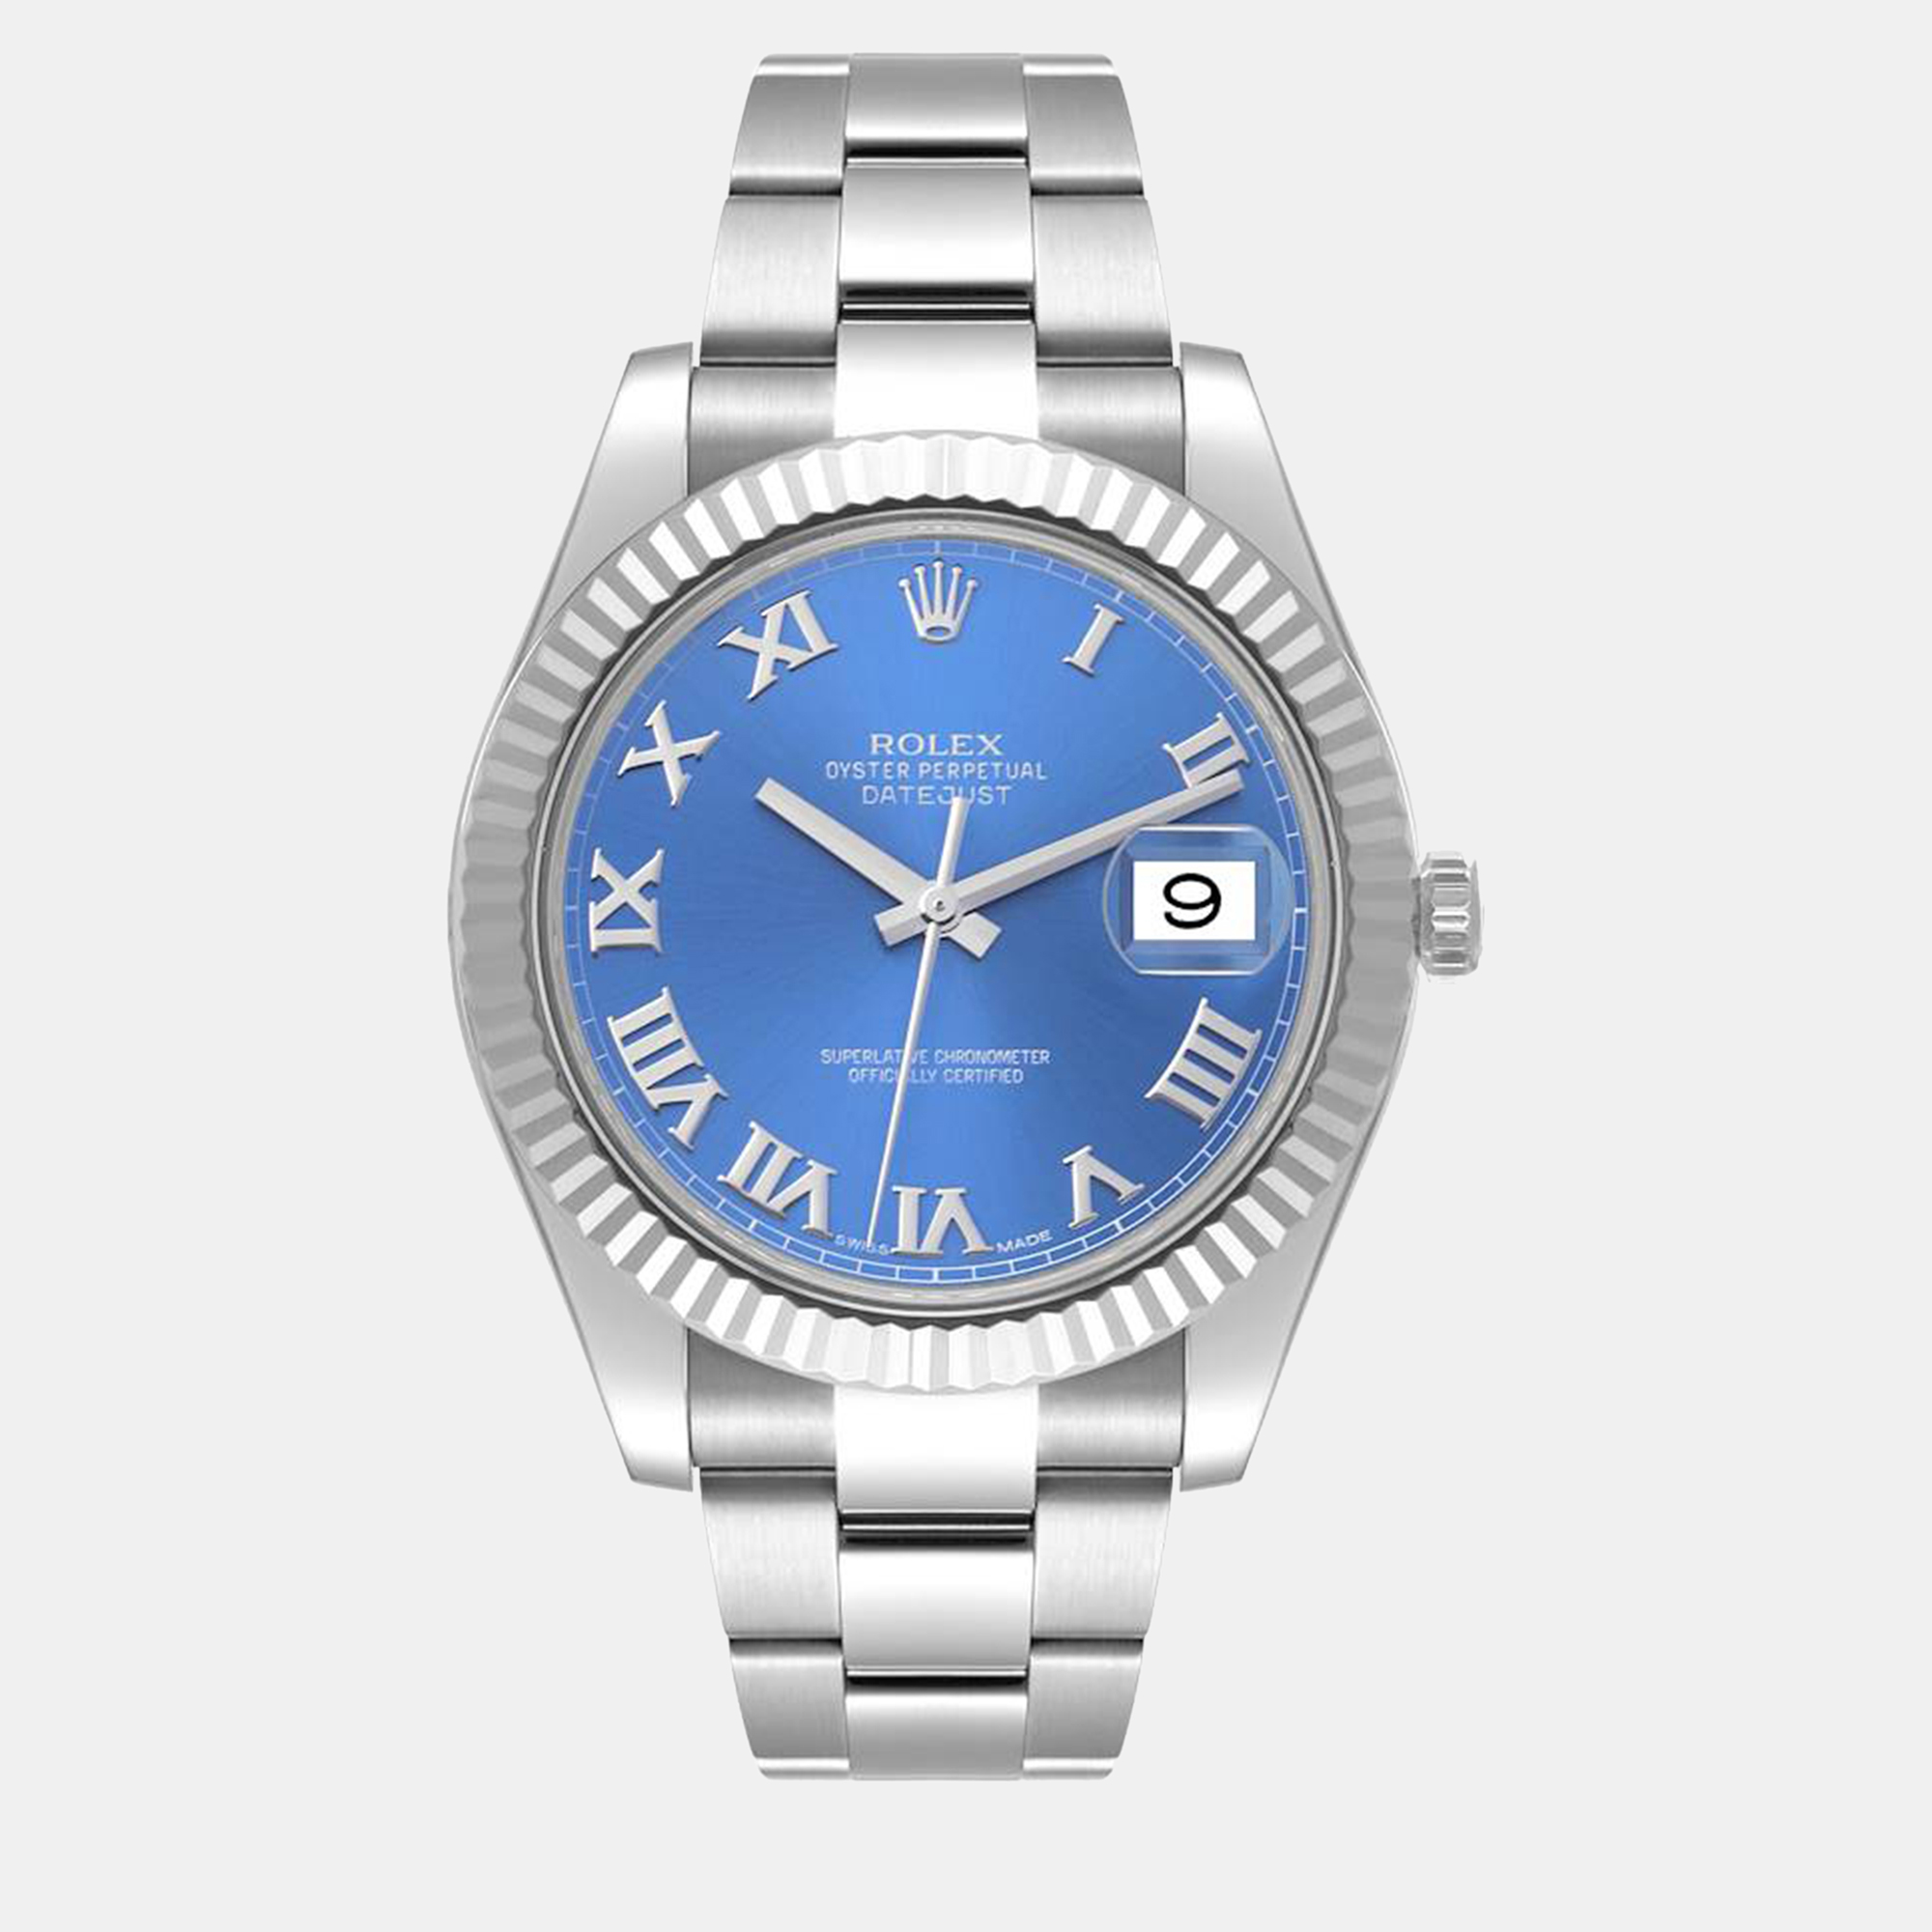 Rolex datejust ii steel white gold blue roman dial men's watch 116334 41 mm